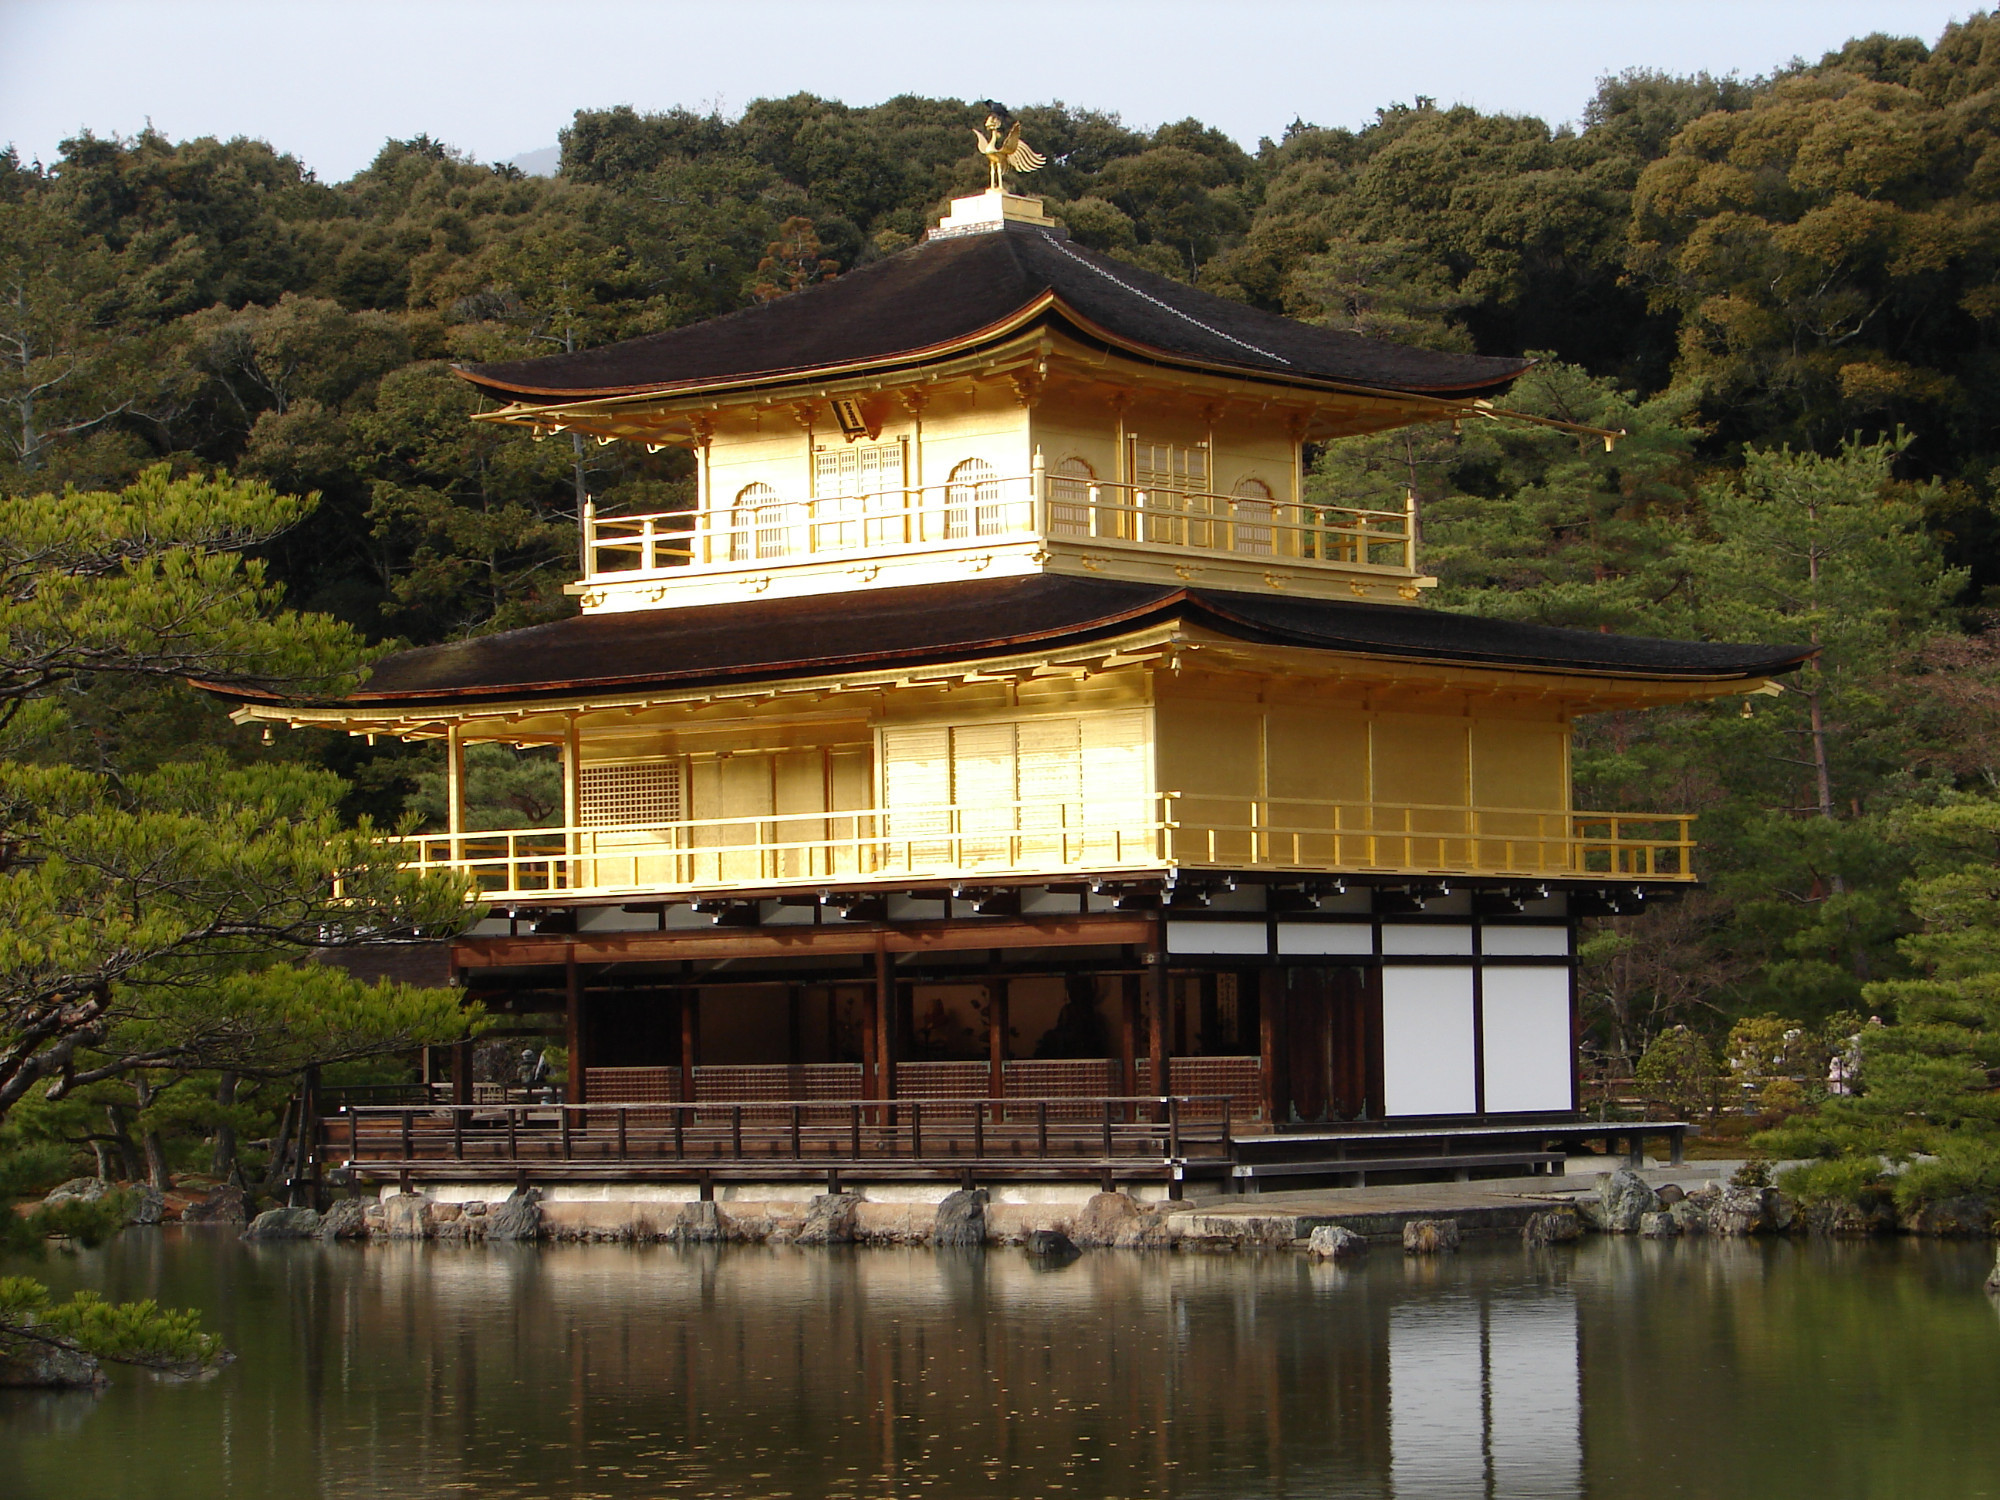 Golden Pavillion - Kinkaku-ji, Japan